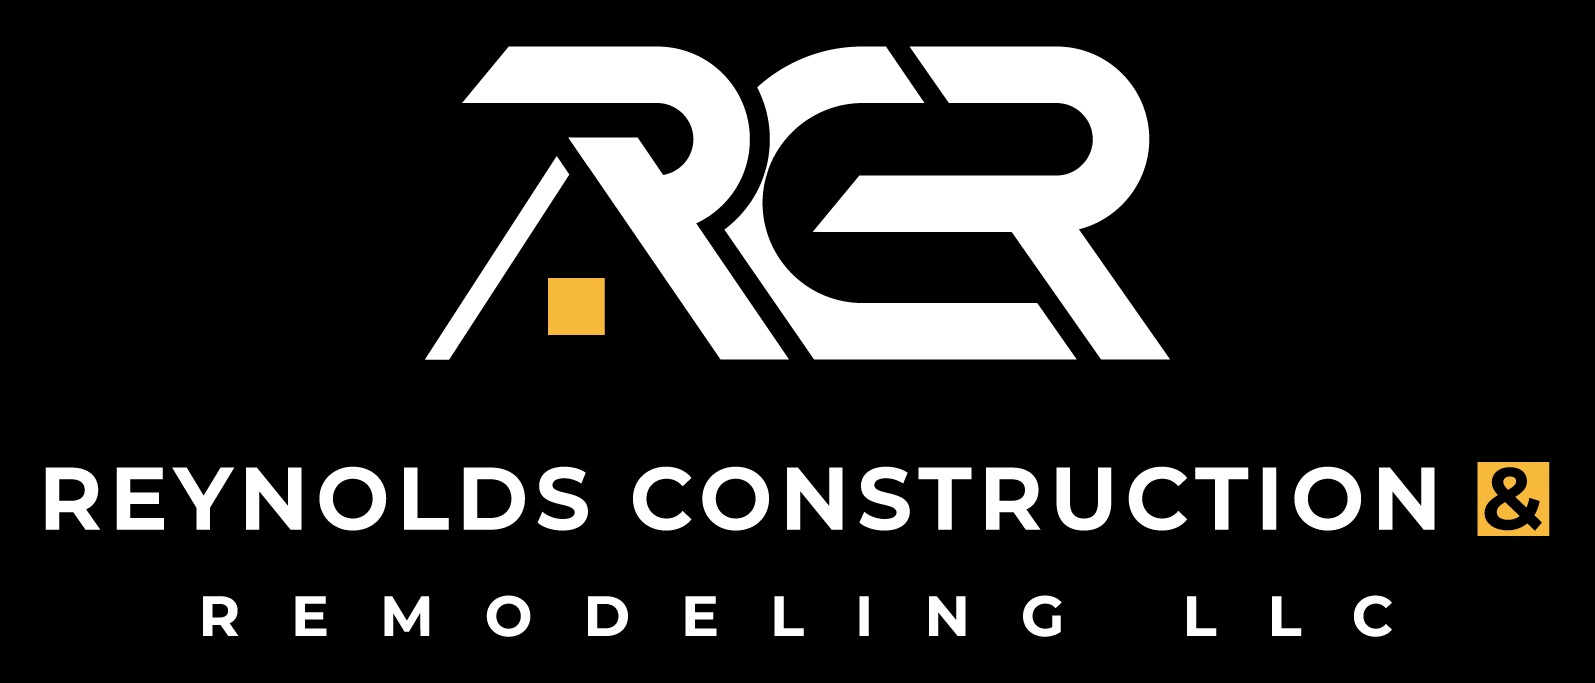 Reynolds Construction and Remodeling LLC logo